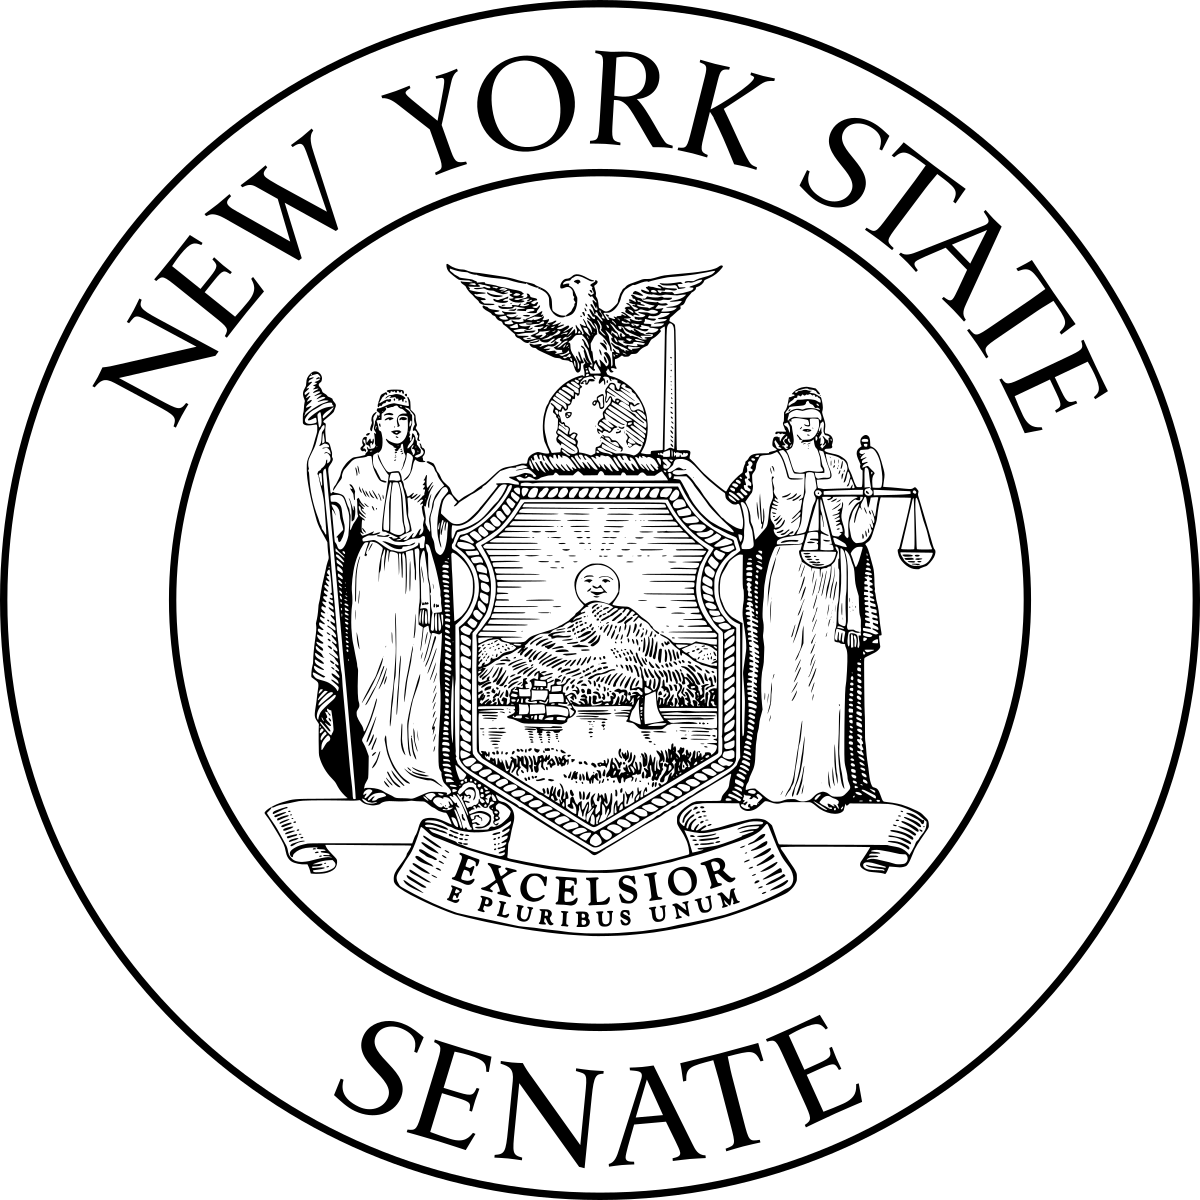 New York State Senate - Wikipedia